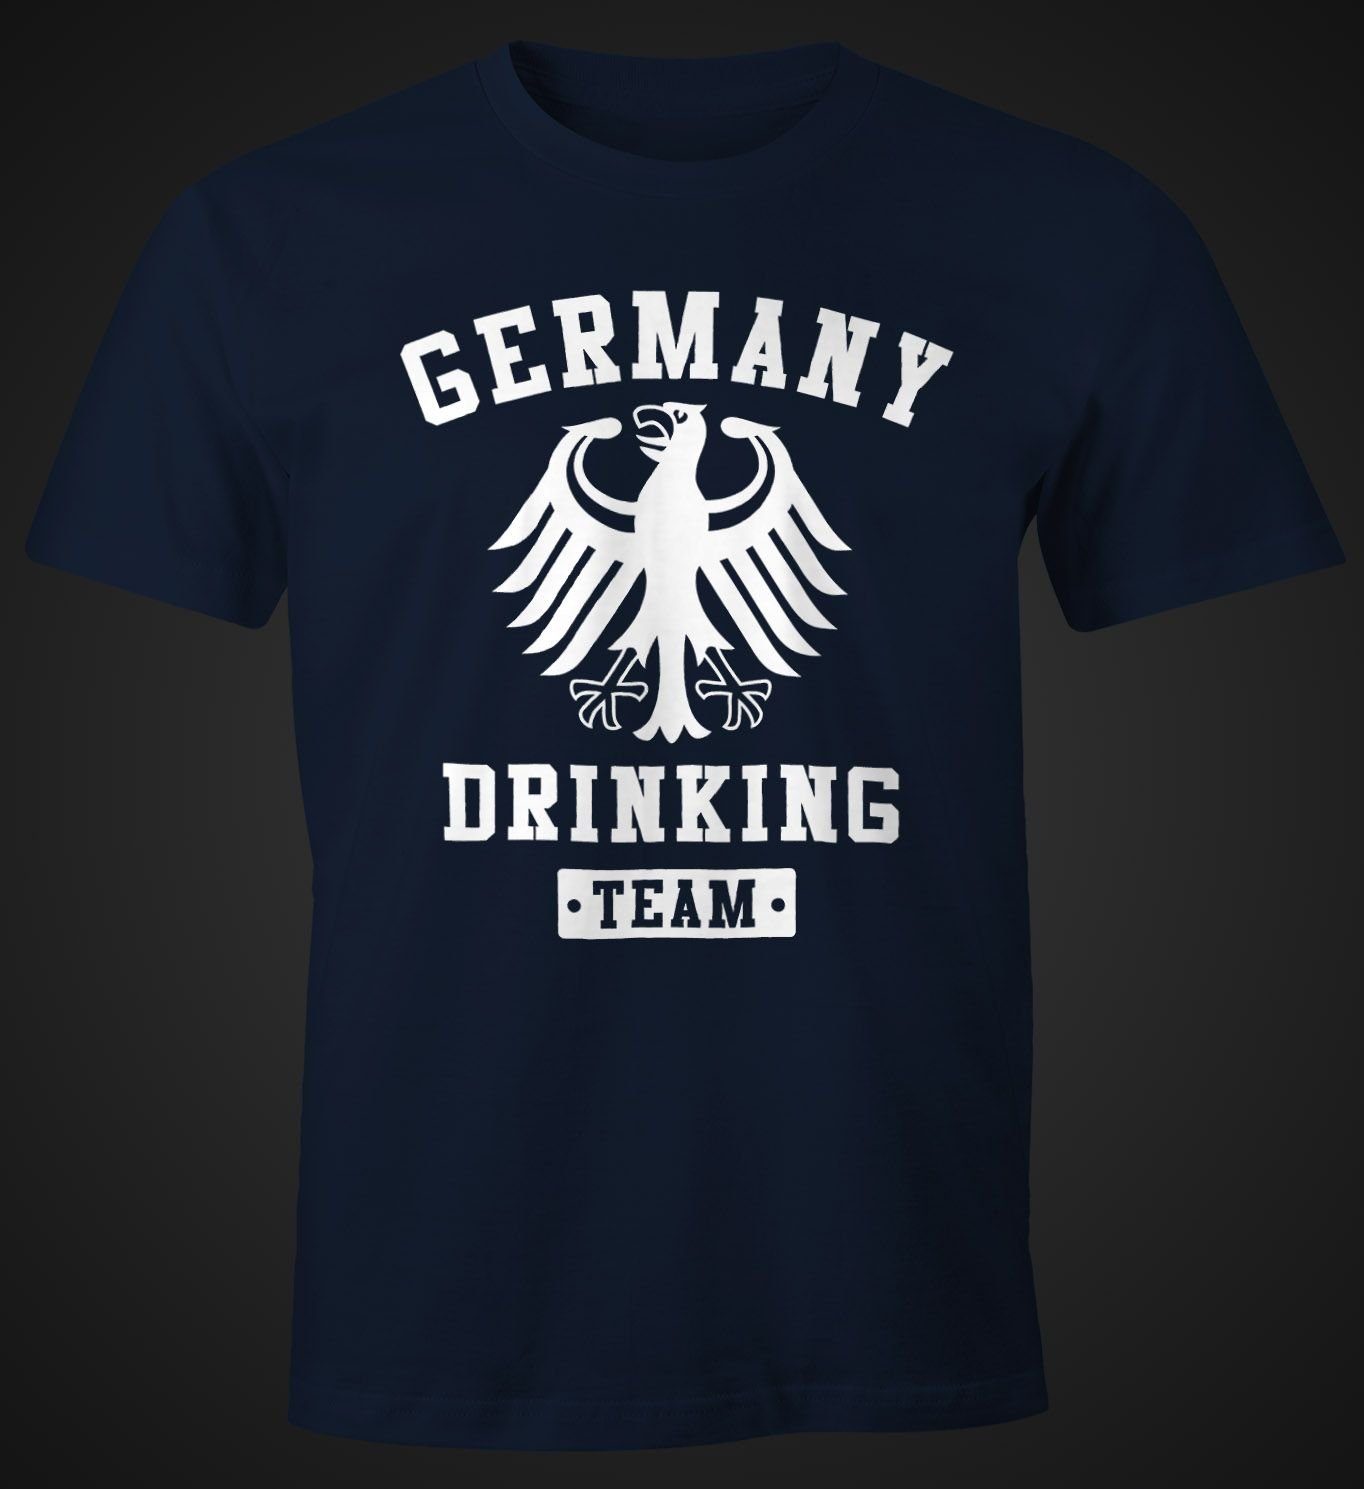 MoonWorks Print-Shirt Deutschland Moonworks® navy Adler Fun-Shirt Team Print Bier Herren T-Shirt Germany Drinking mit